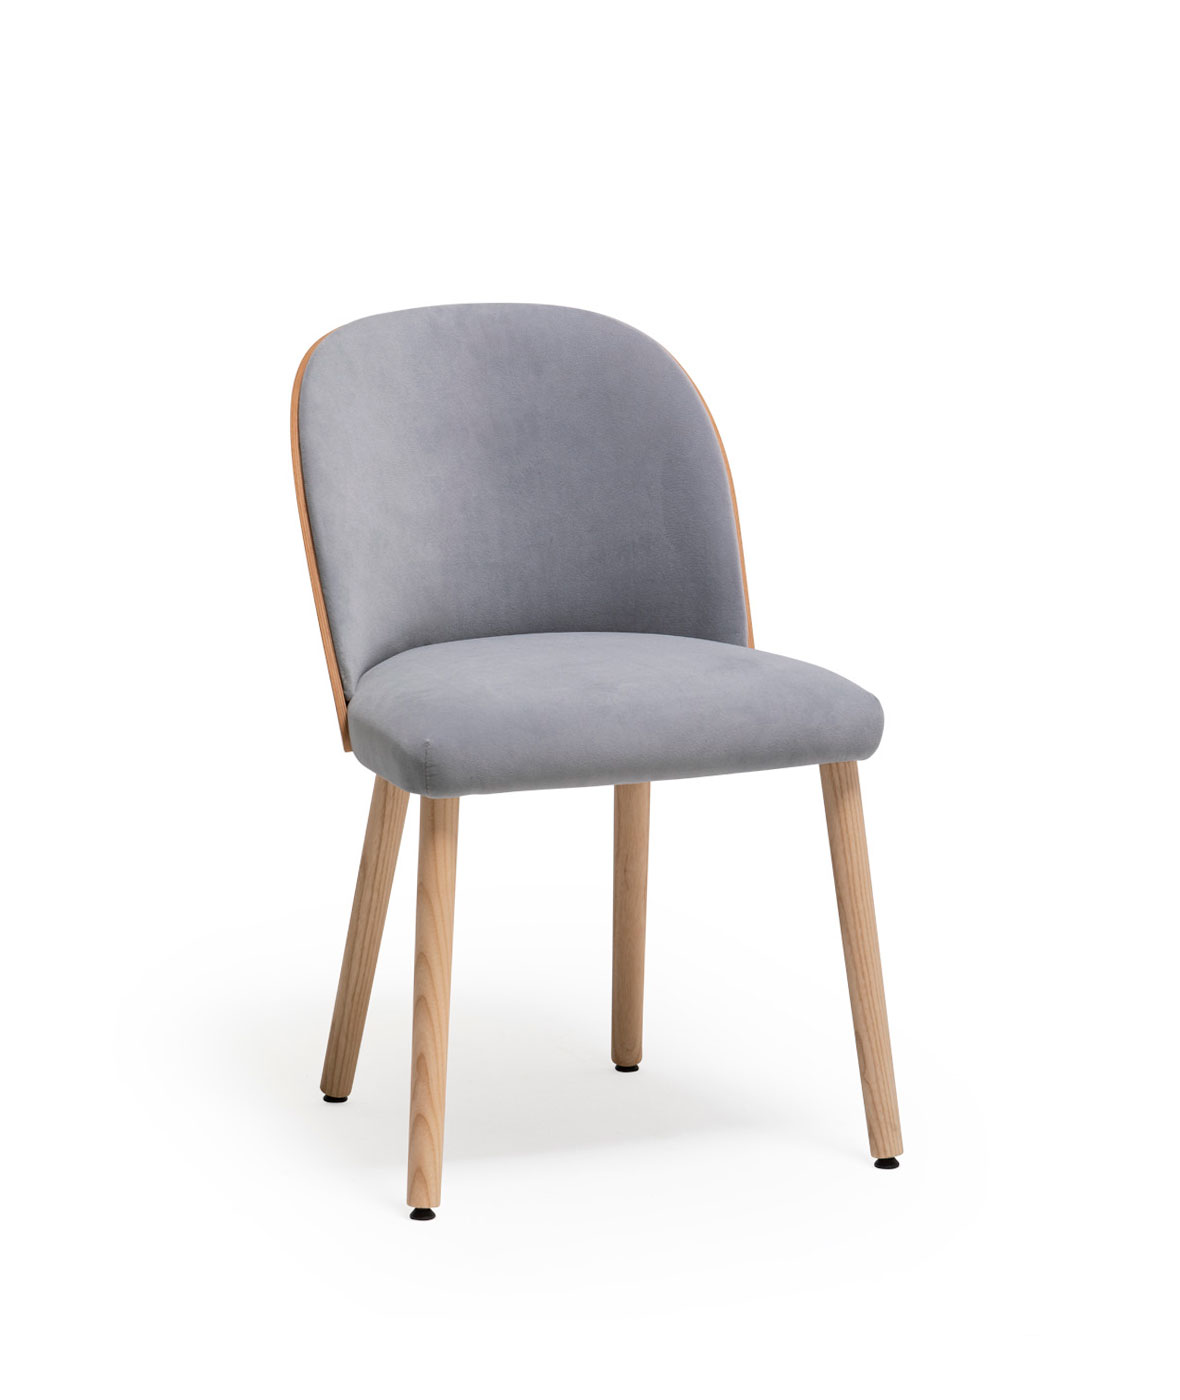 Cistell Slim chair with wooden legs - Vergés